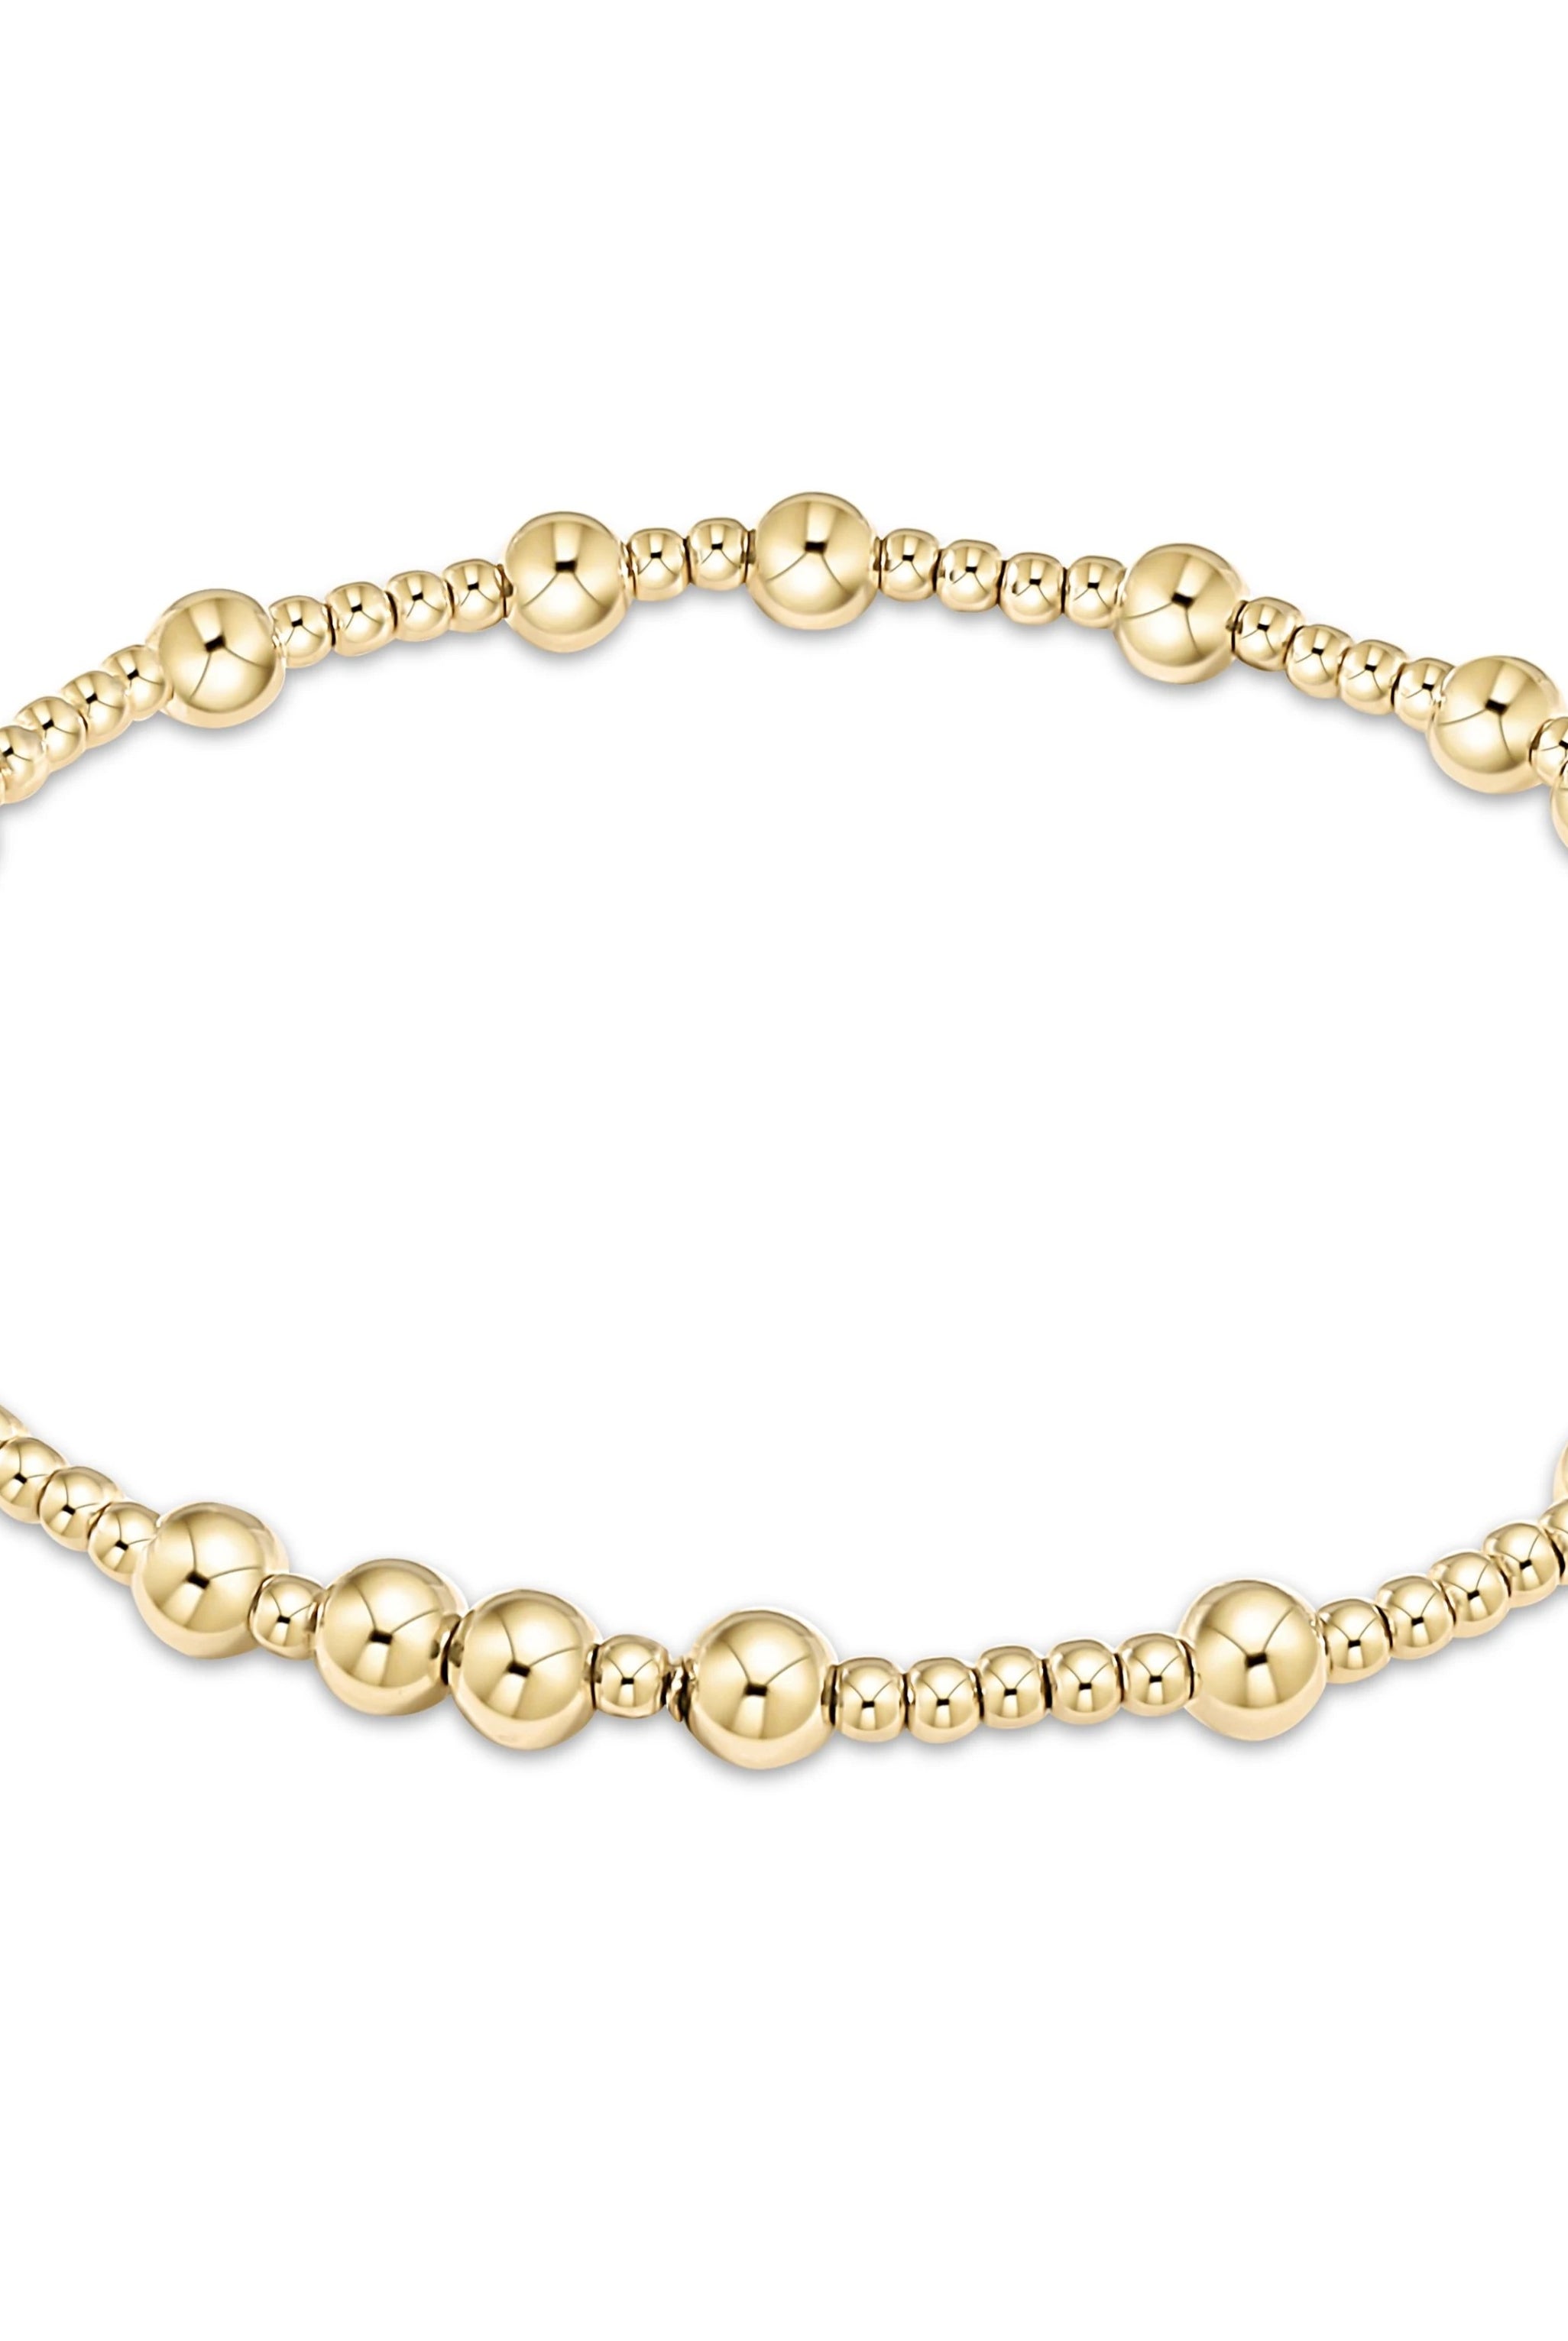 4mm Hope Unwritten Gold Bracelet-Bracelets-eNewton-The Lovely Closet, Women's Fashion Boutique in Alexandria, KY